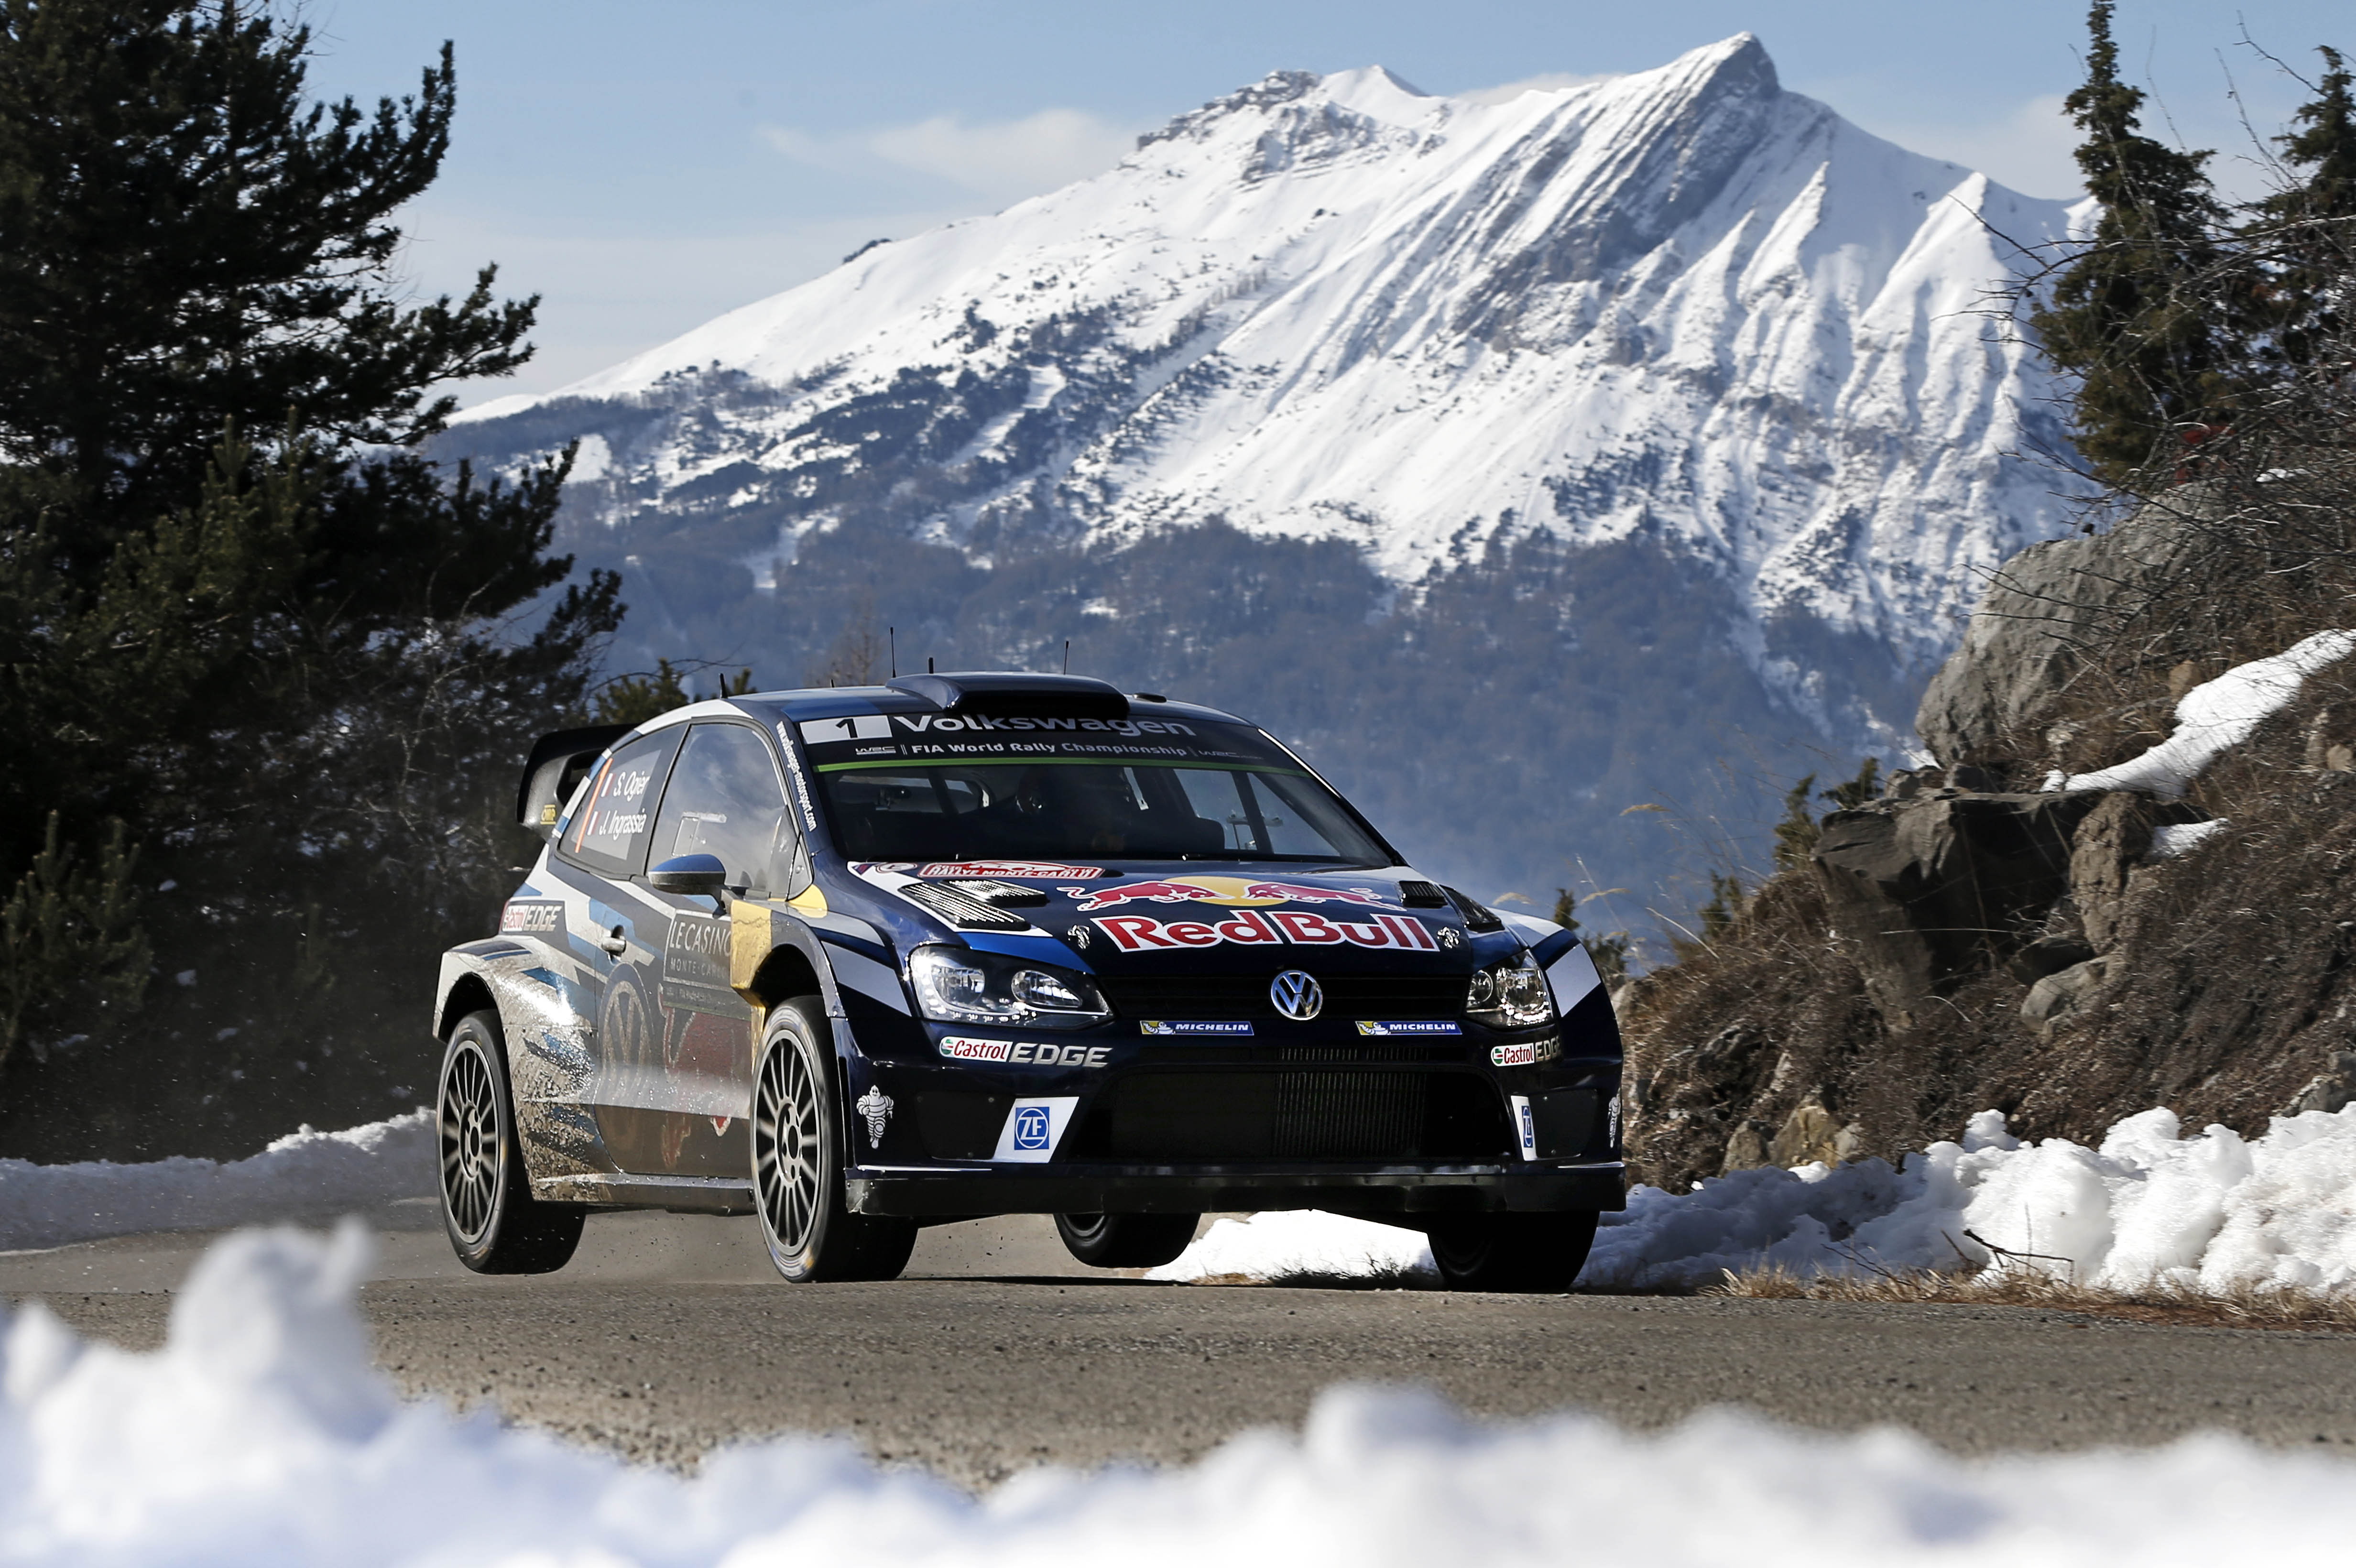 Sebastien Ogier (FR) / Julien Ingrassia (FR) - Volkswagen Polo WRC